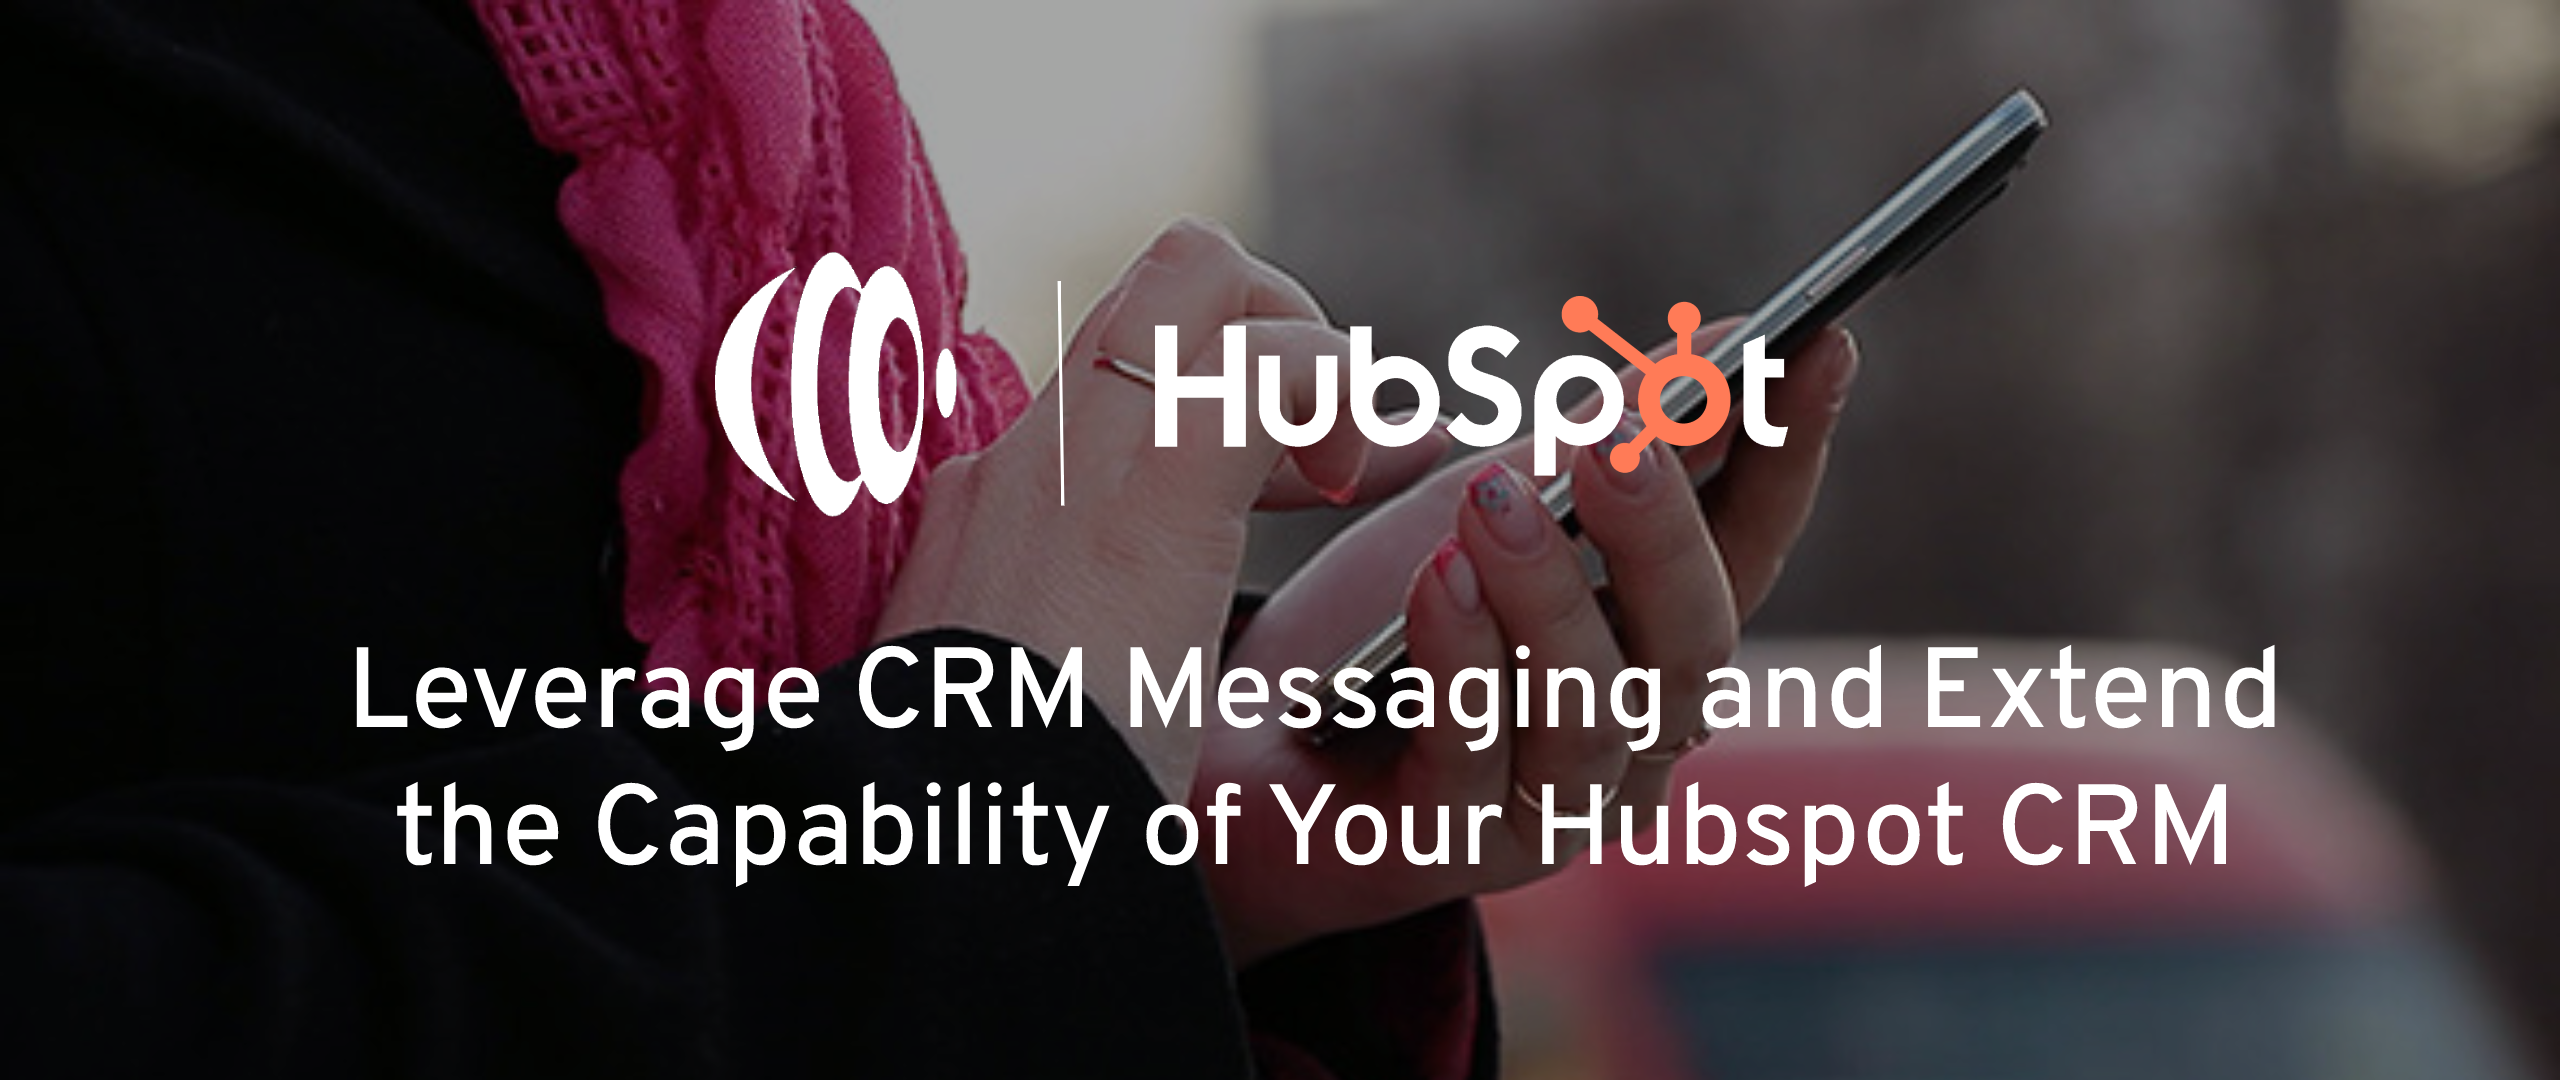 Messaging on HubSpot